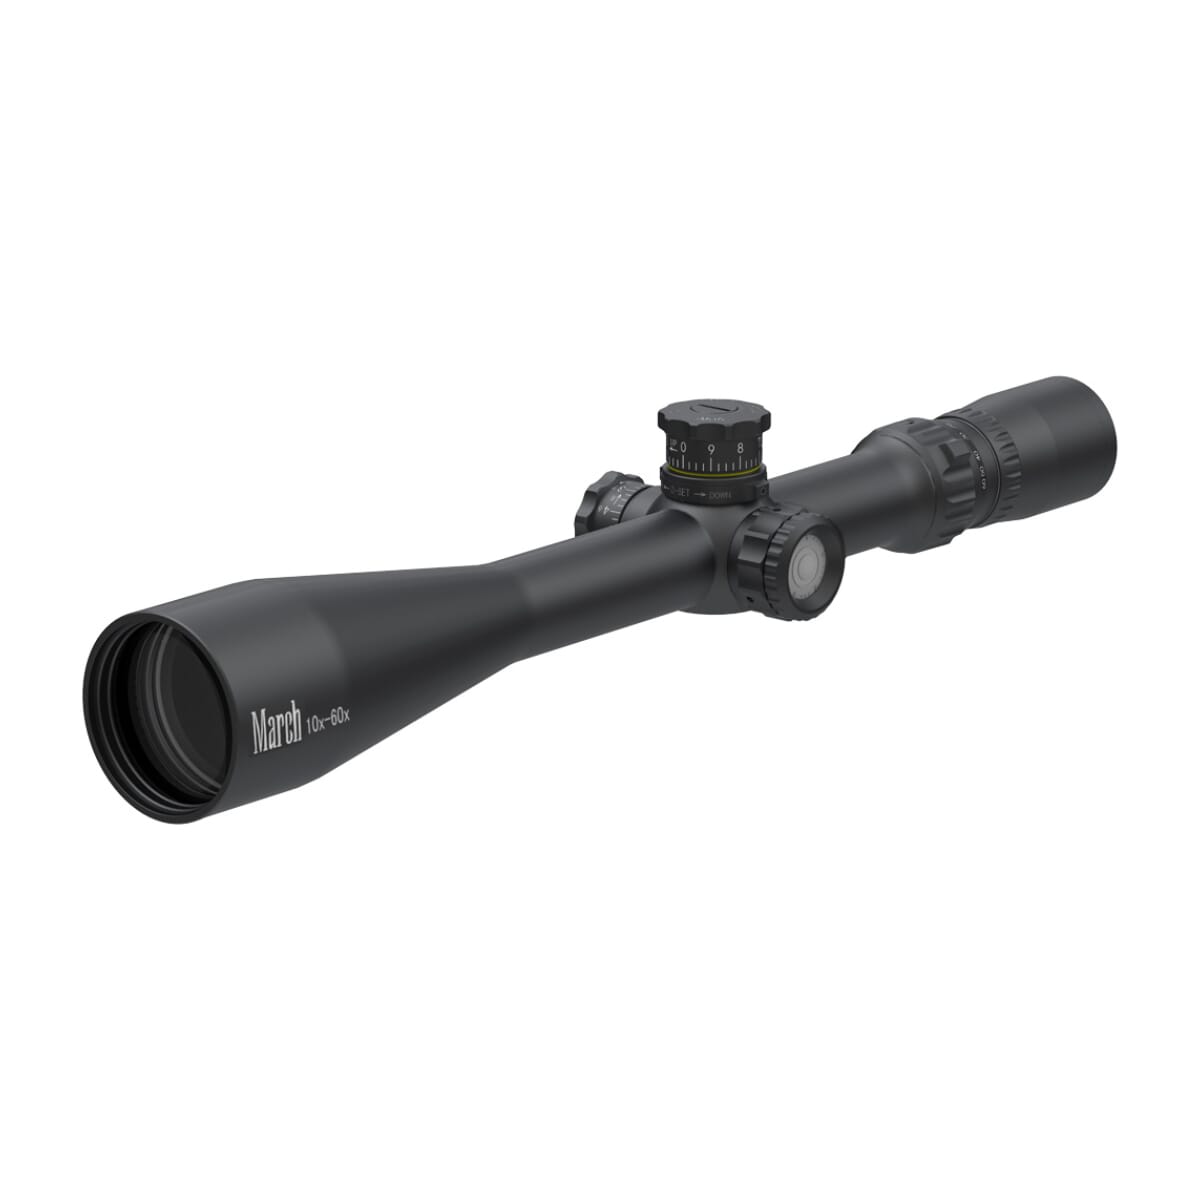 March Tactical 10-60x52mm MTR-2 Reticle 1/8MOA Illuminated Riflescope D60V52TI-MTR-2-800201